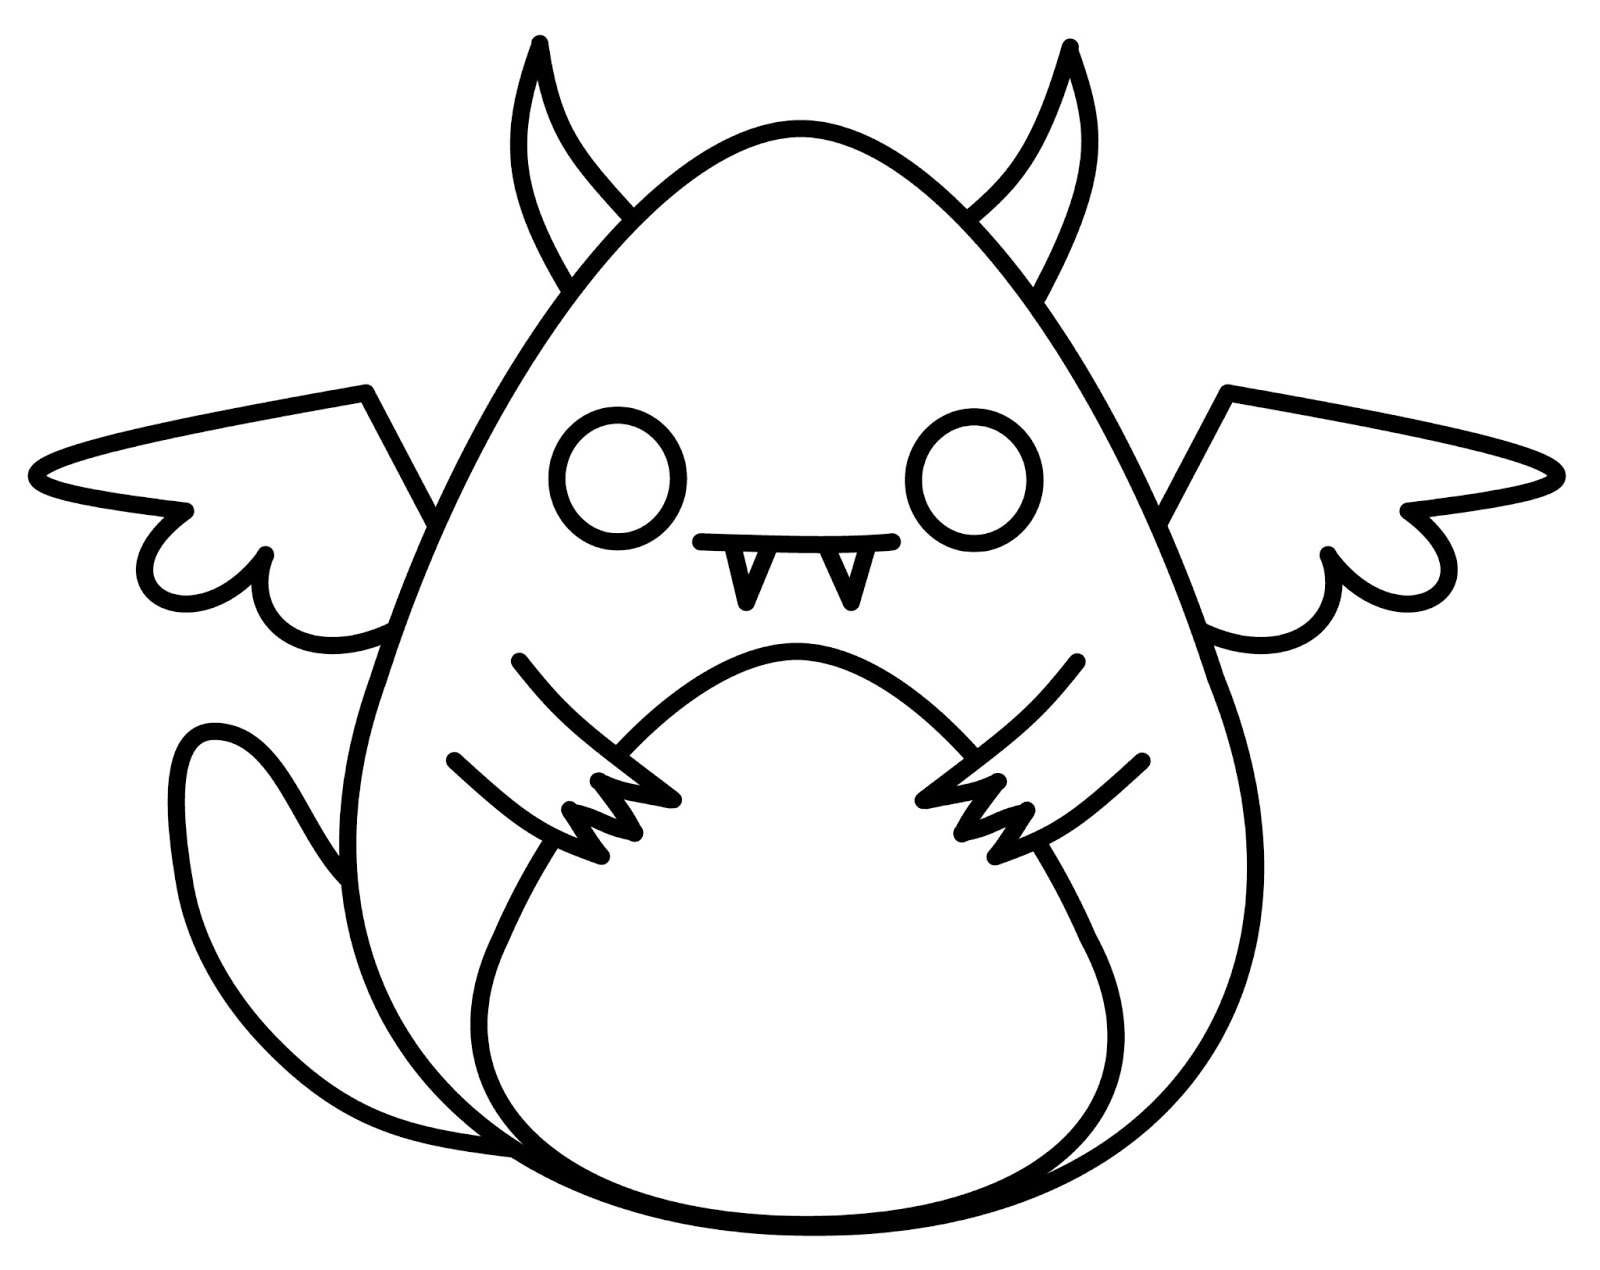 Draw doodle monster stuffed animal - thatreka